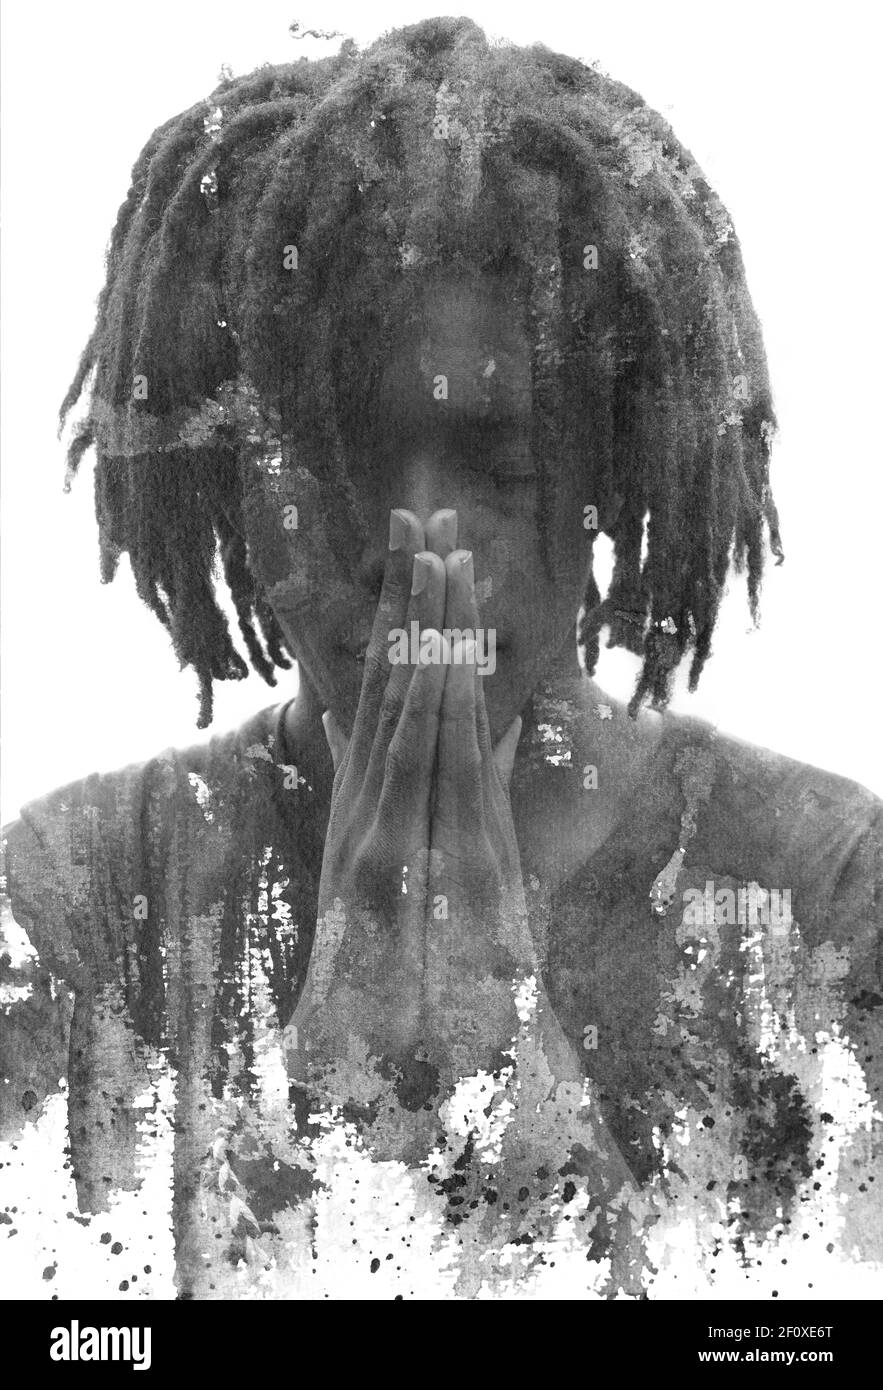 A grunge portrait with ink splash Stock Photo